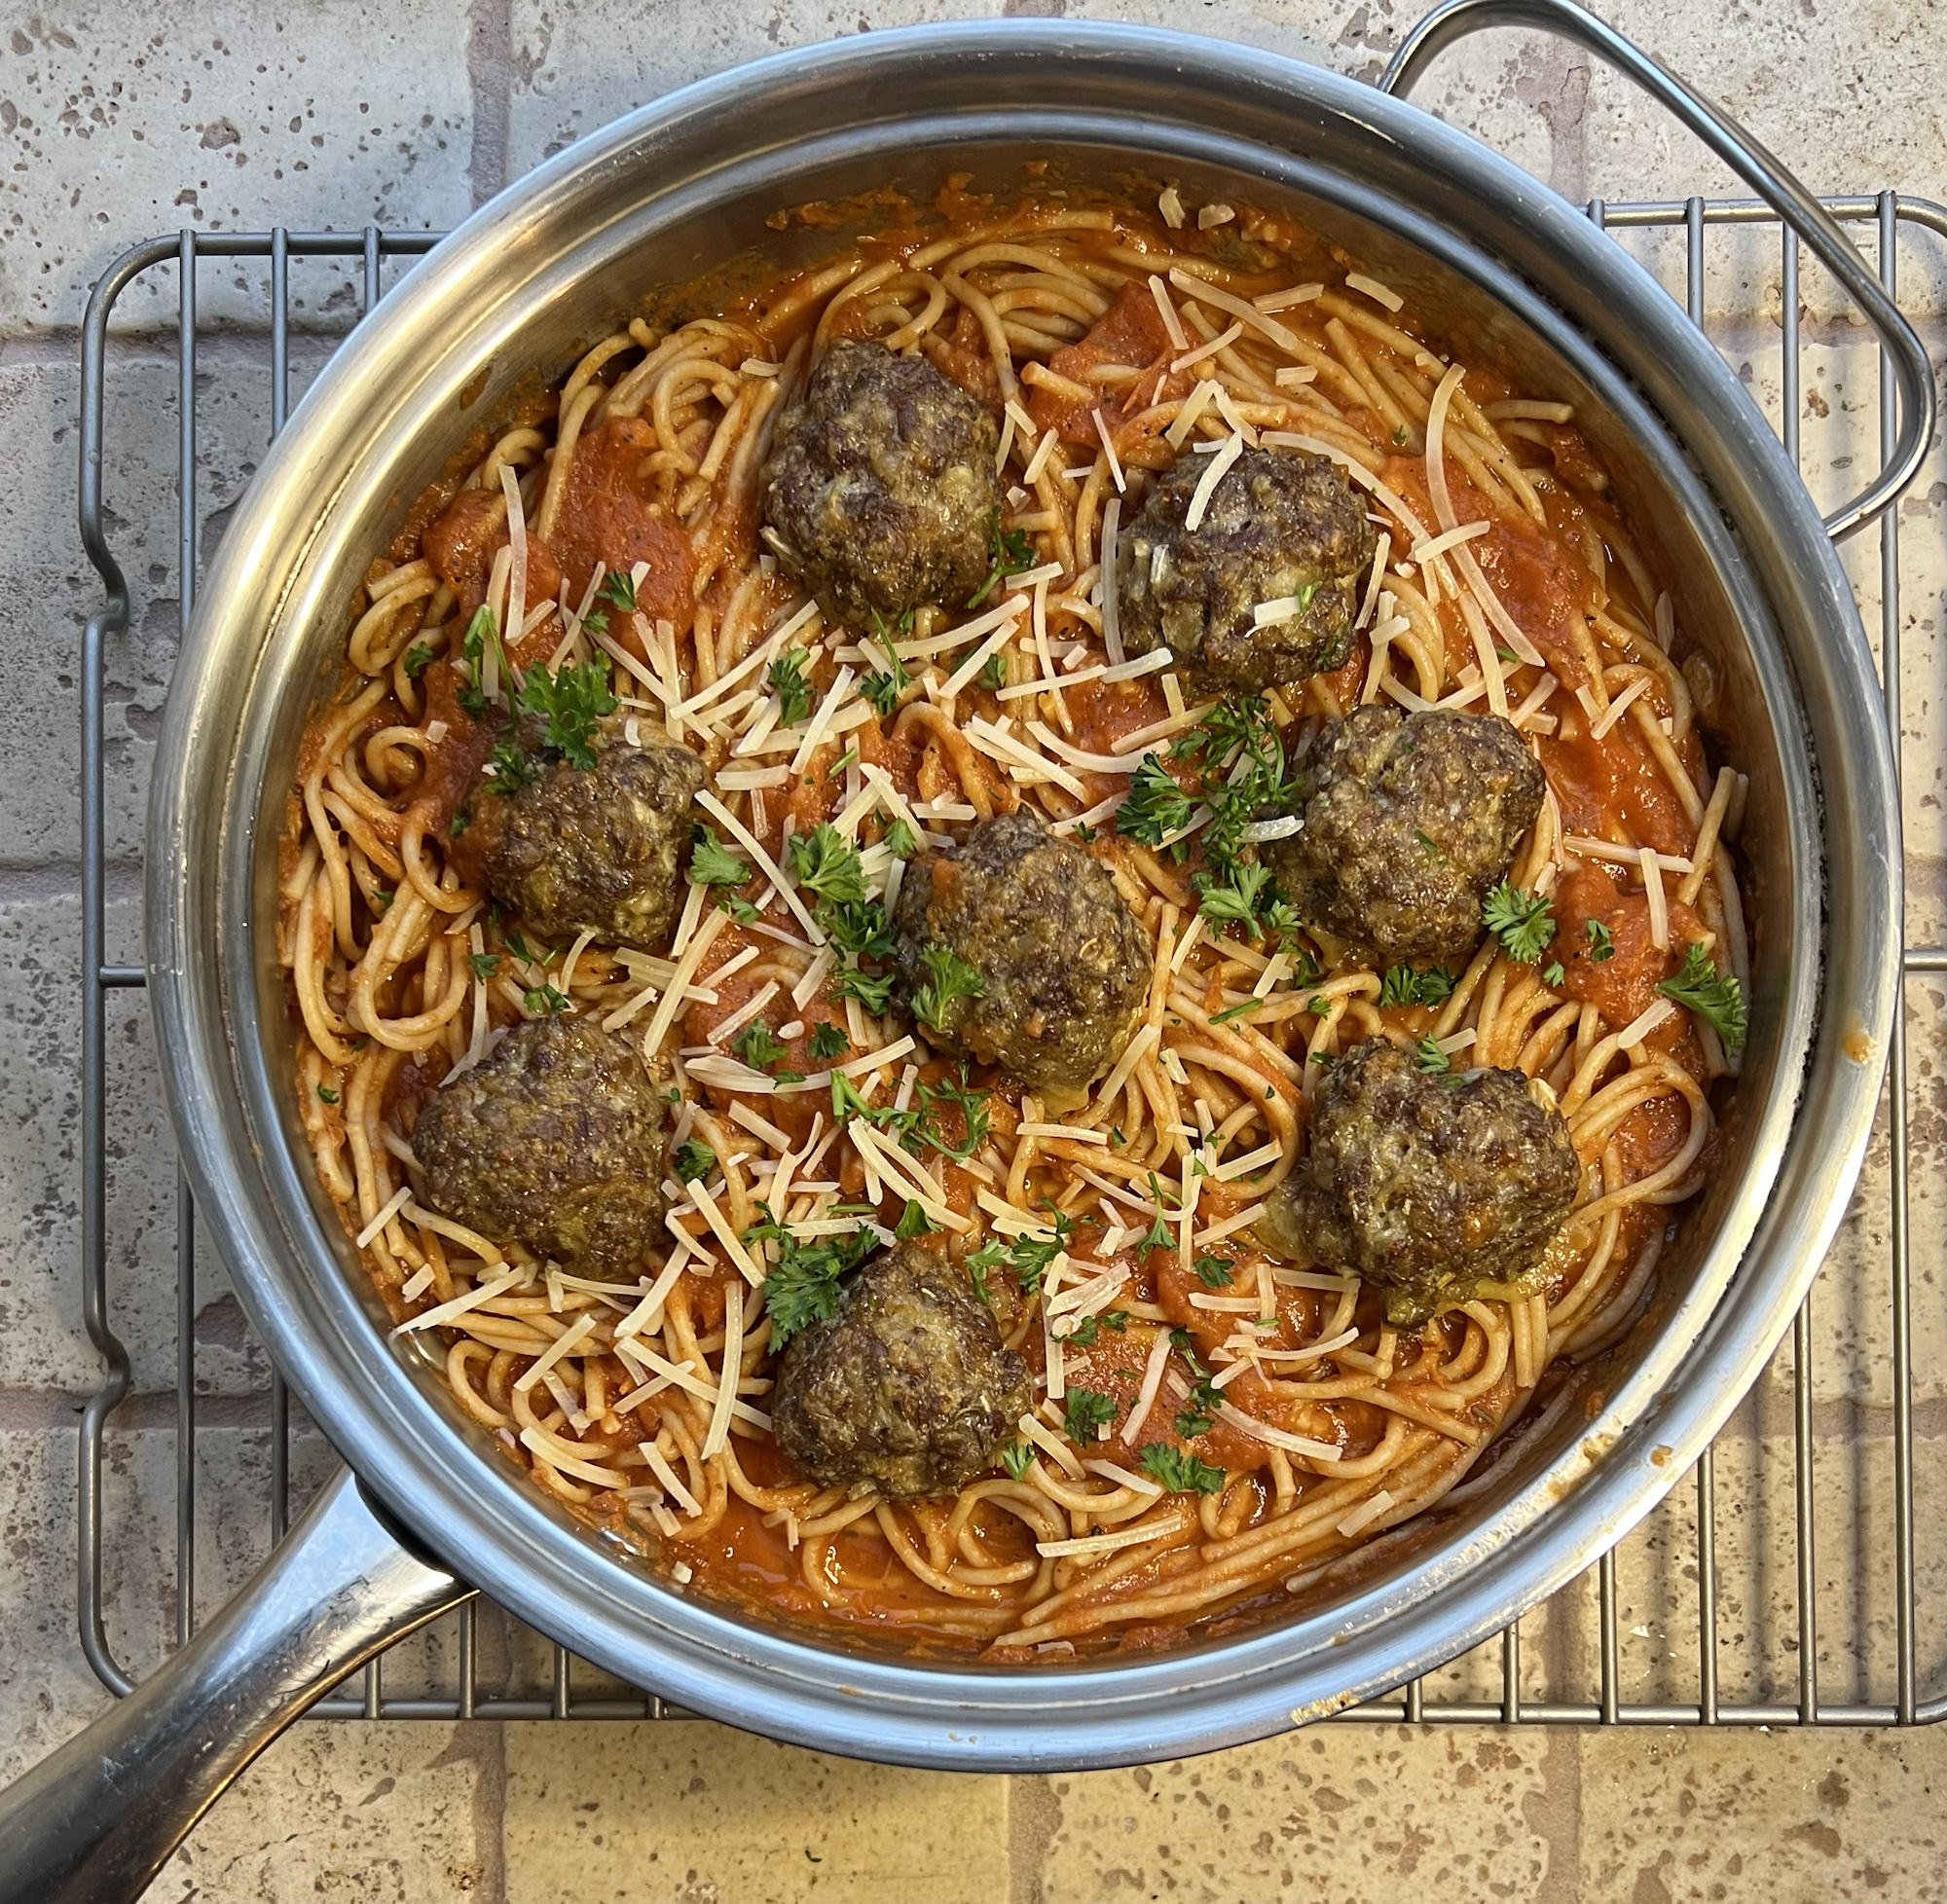 Homemade Italian Style Meatballs